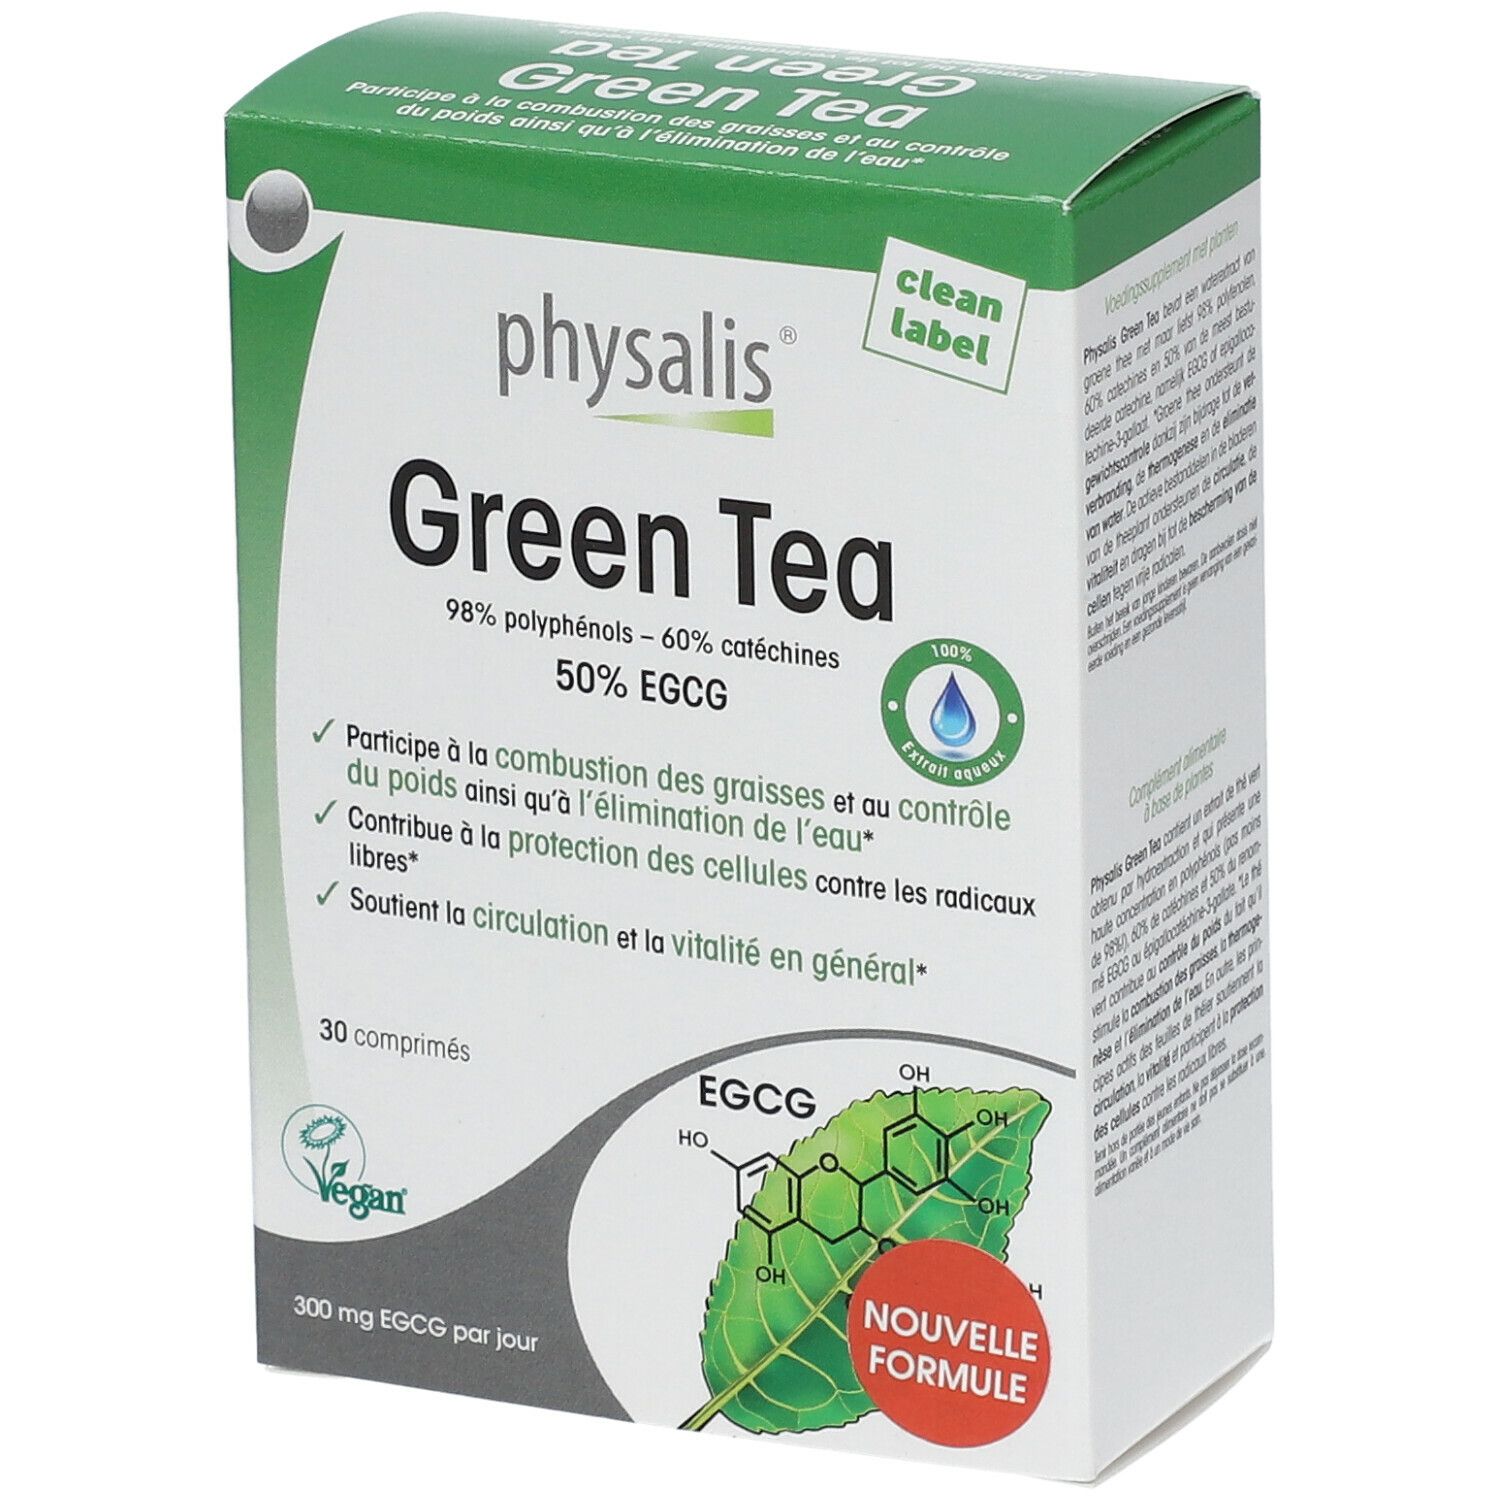 Physalis Green tea